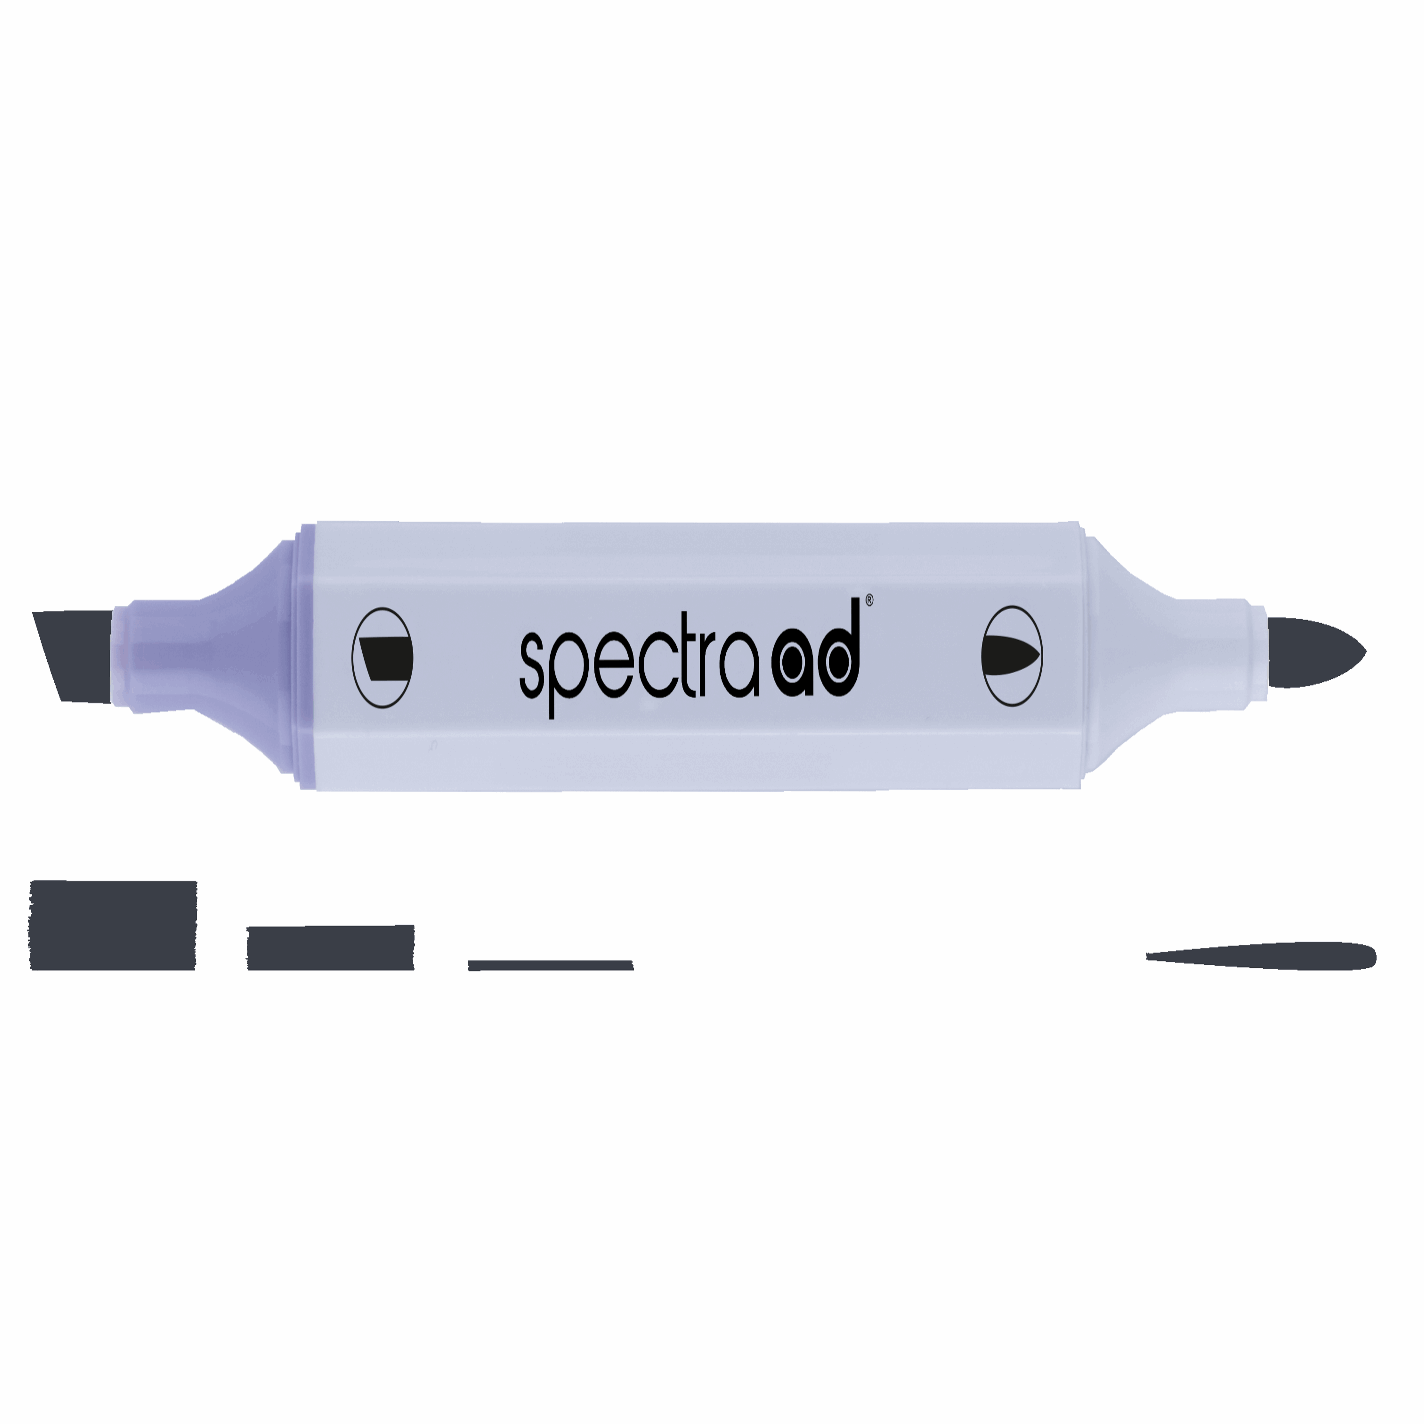 AD Marker Spectra Basic Gray 6